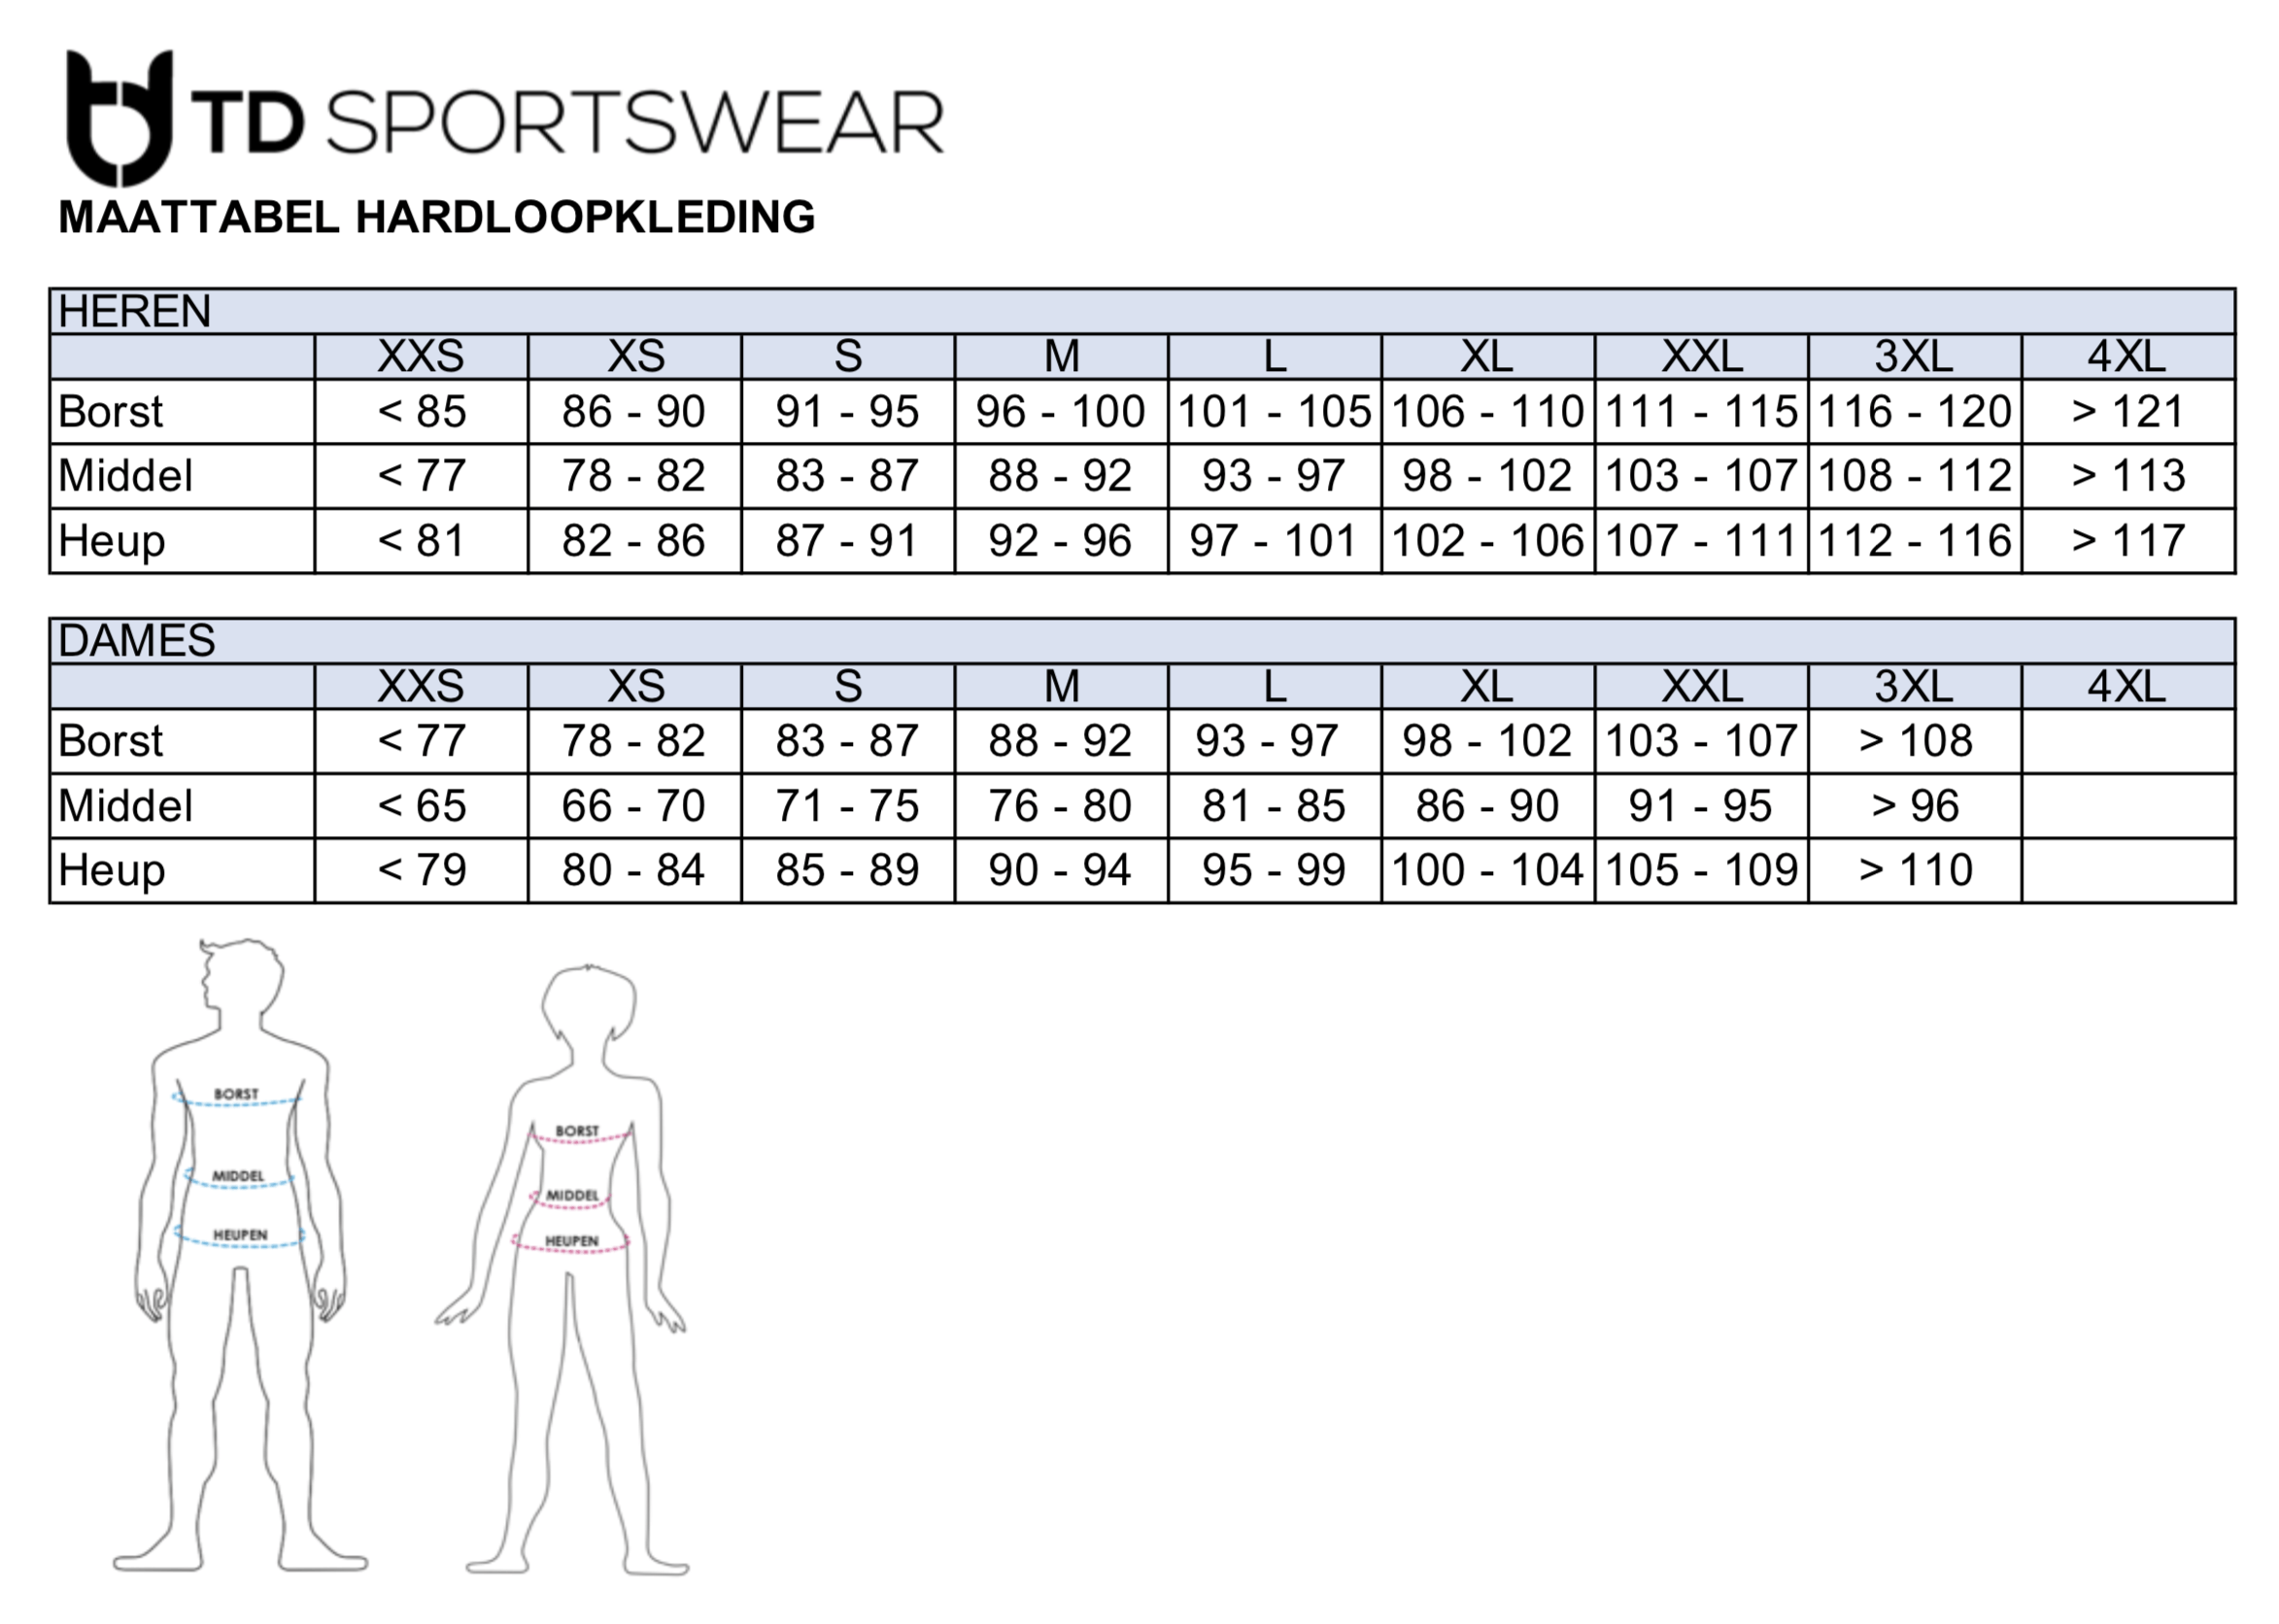 Maattabel hardloopkleding TD sportswear